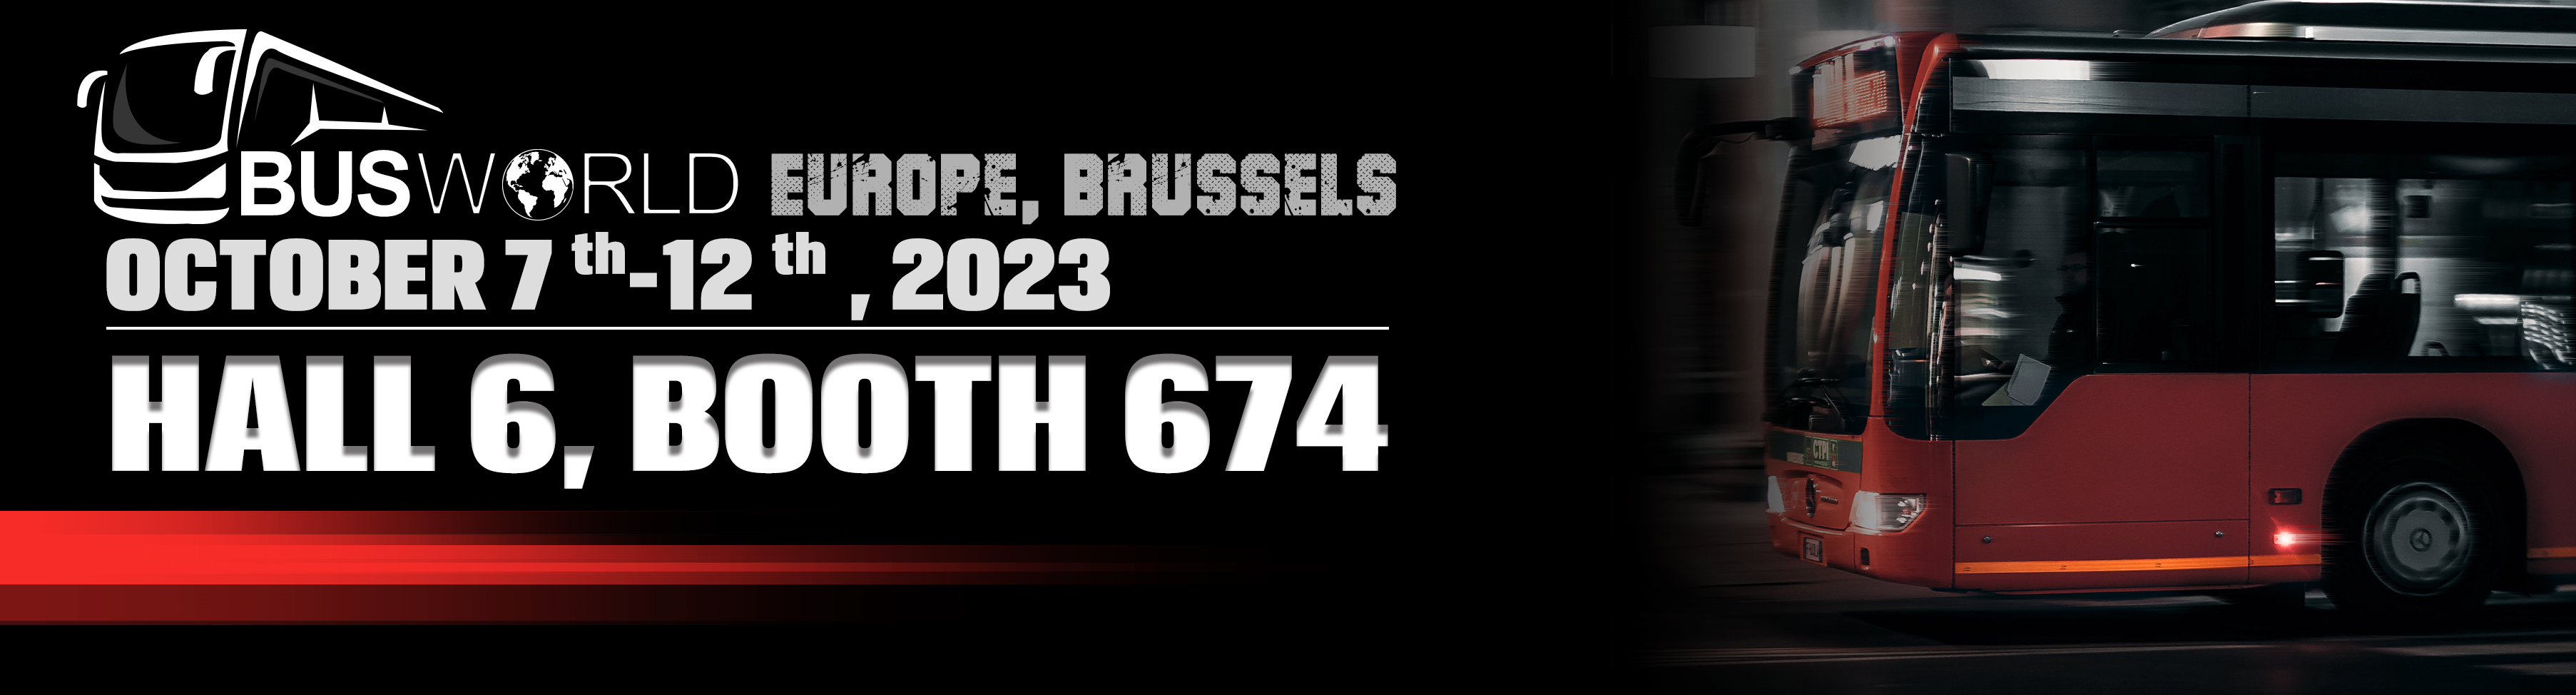 Busworld Europe, Brisel 2023